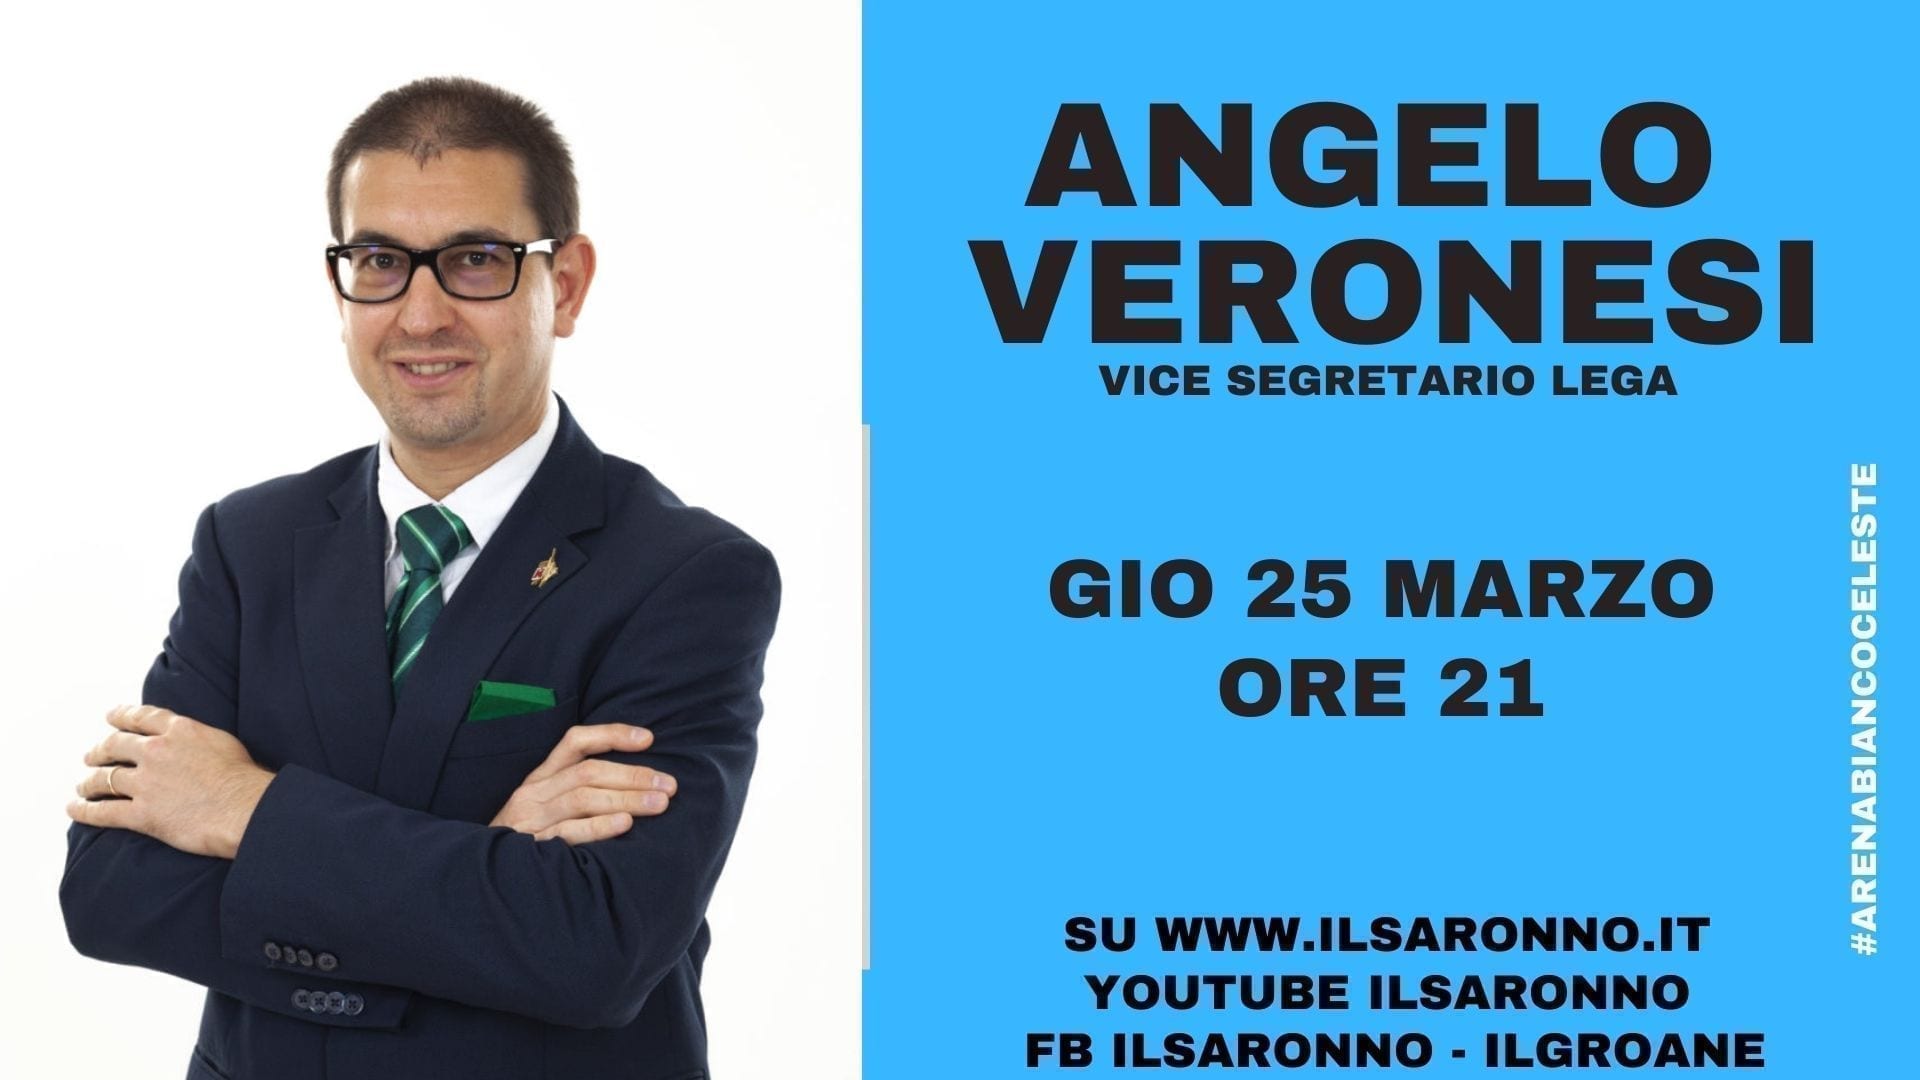 Angelo Veronesi (Lega) protagonista all’Abc: stasera live alle 21